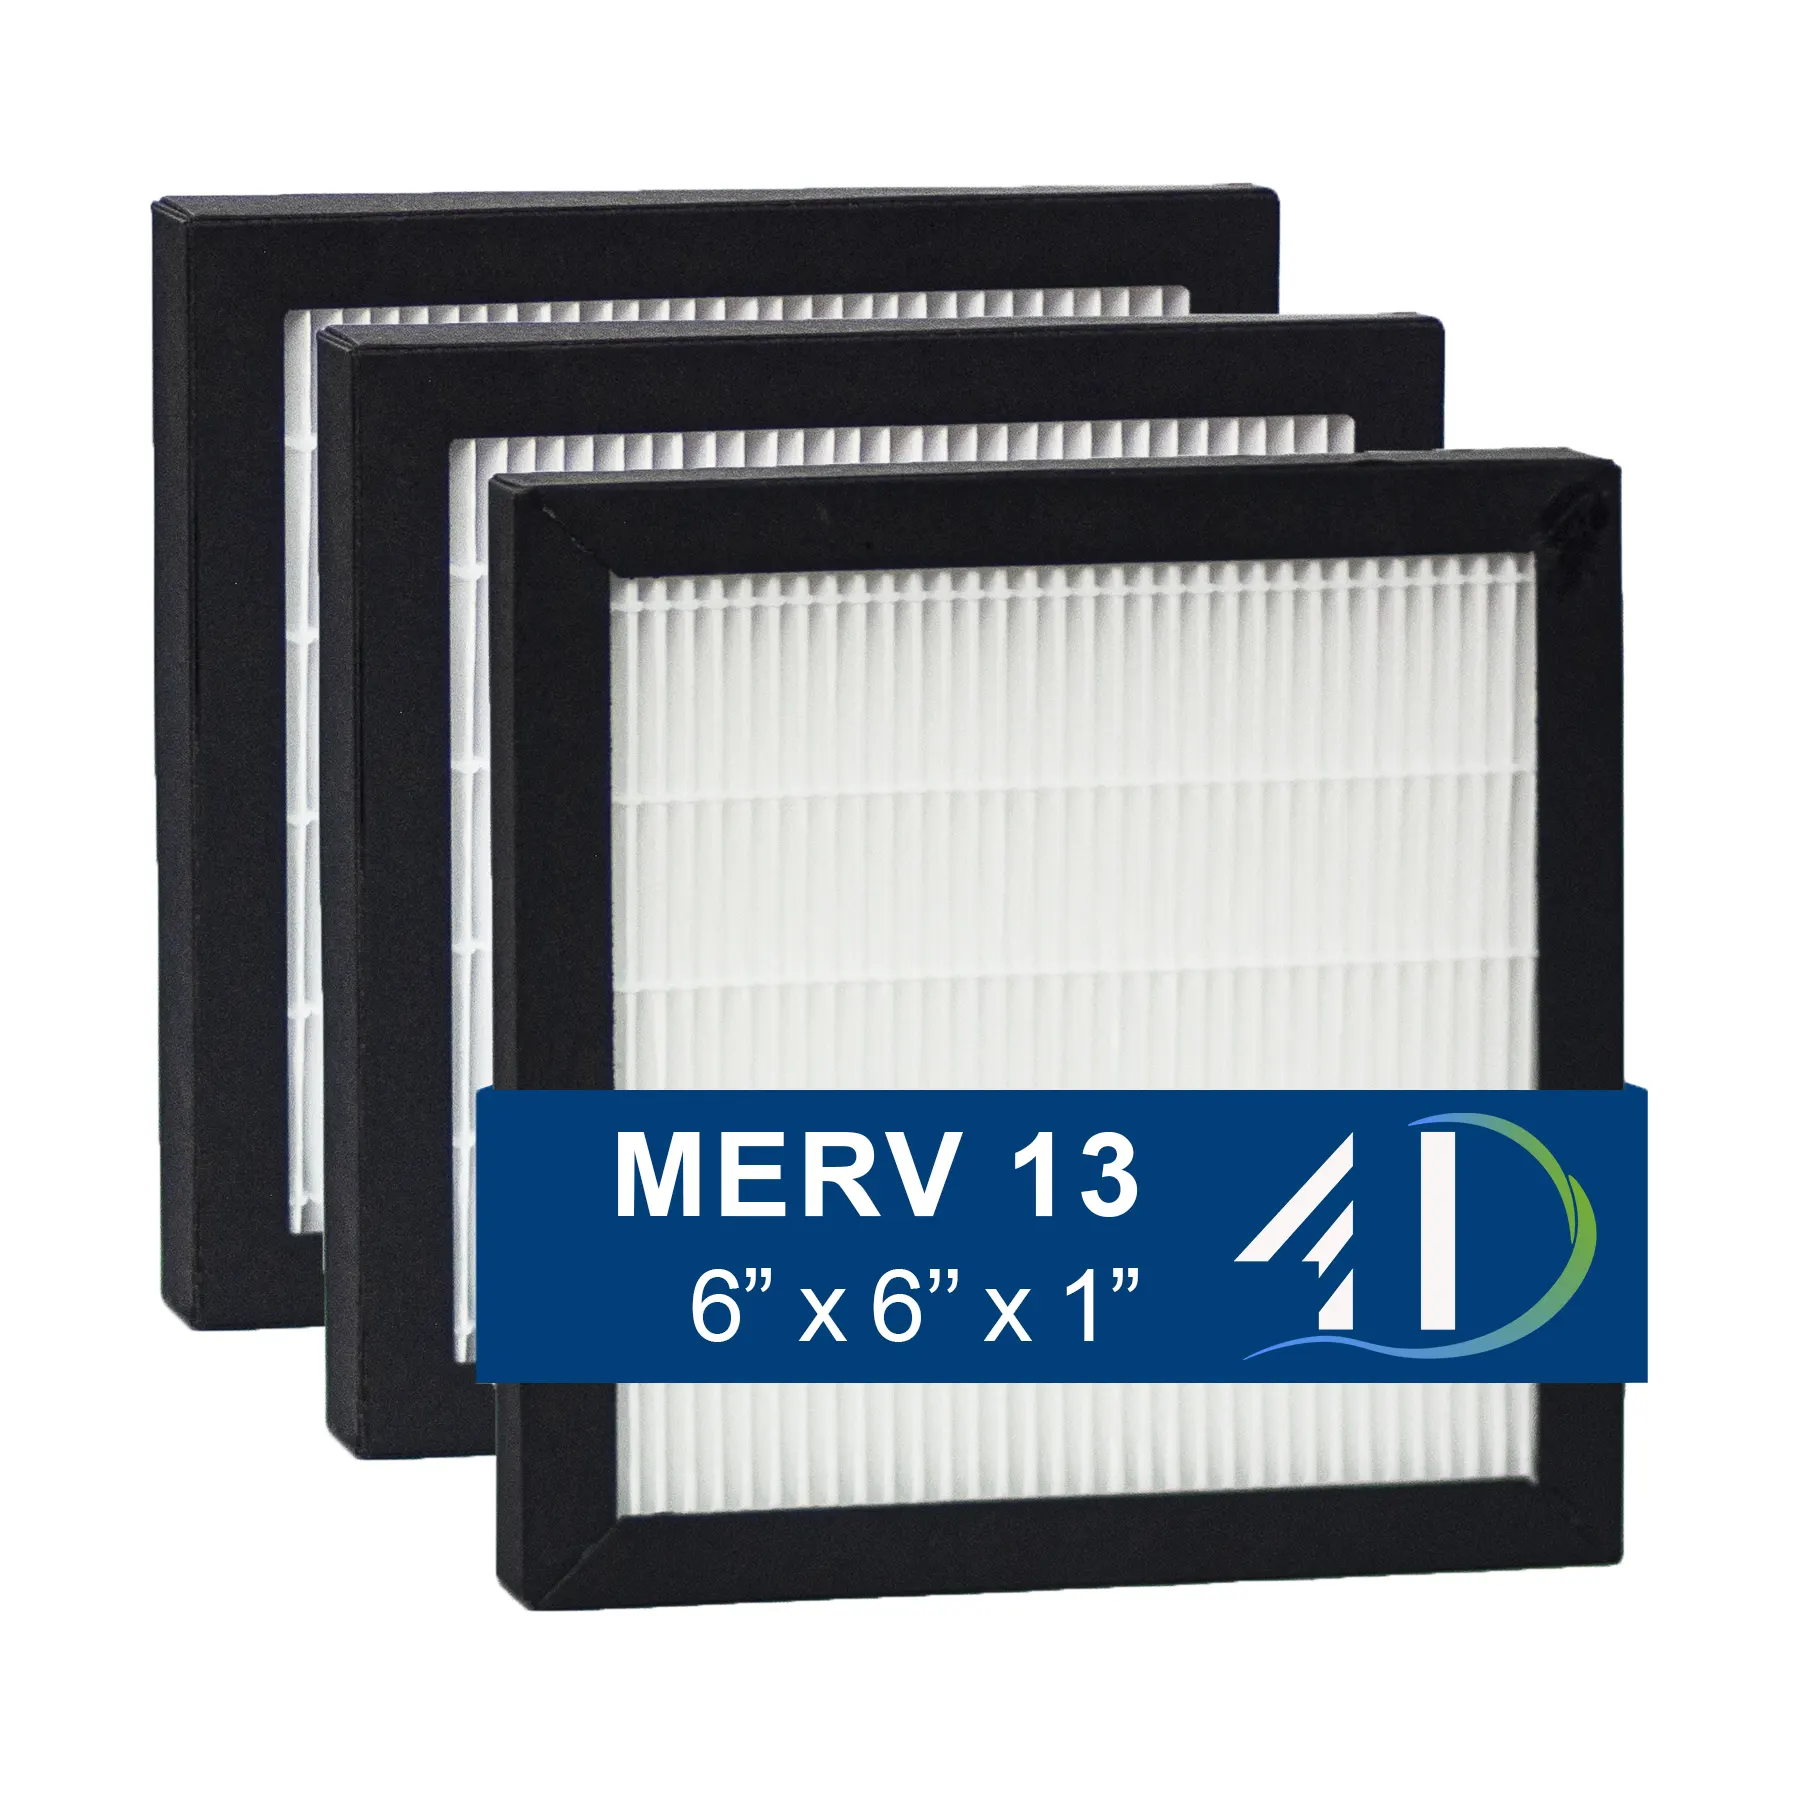 6 inch MERV 13 filters